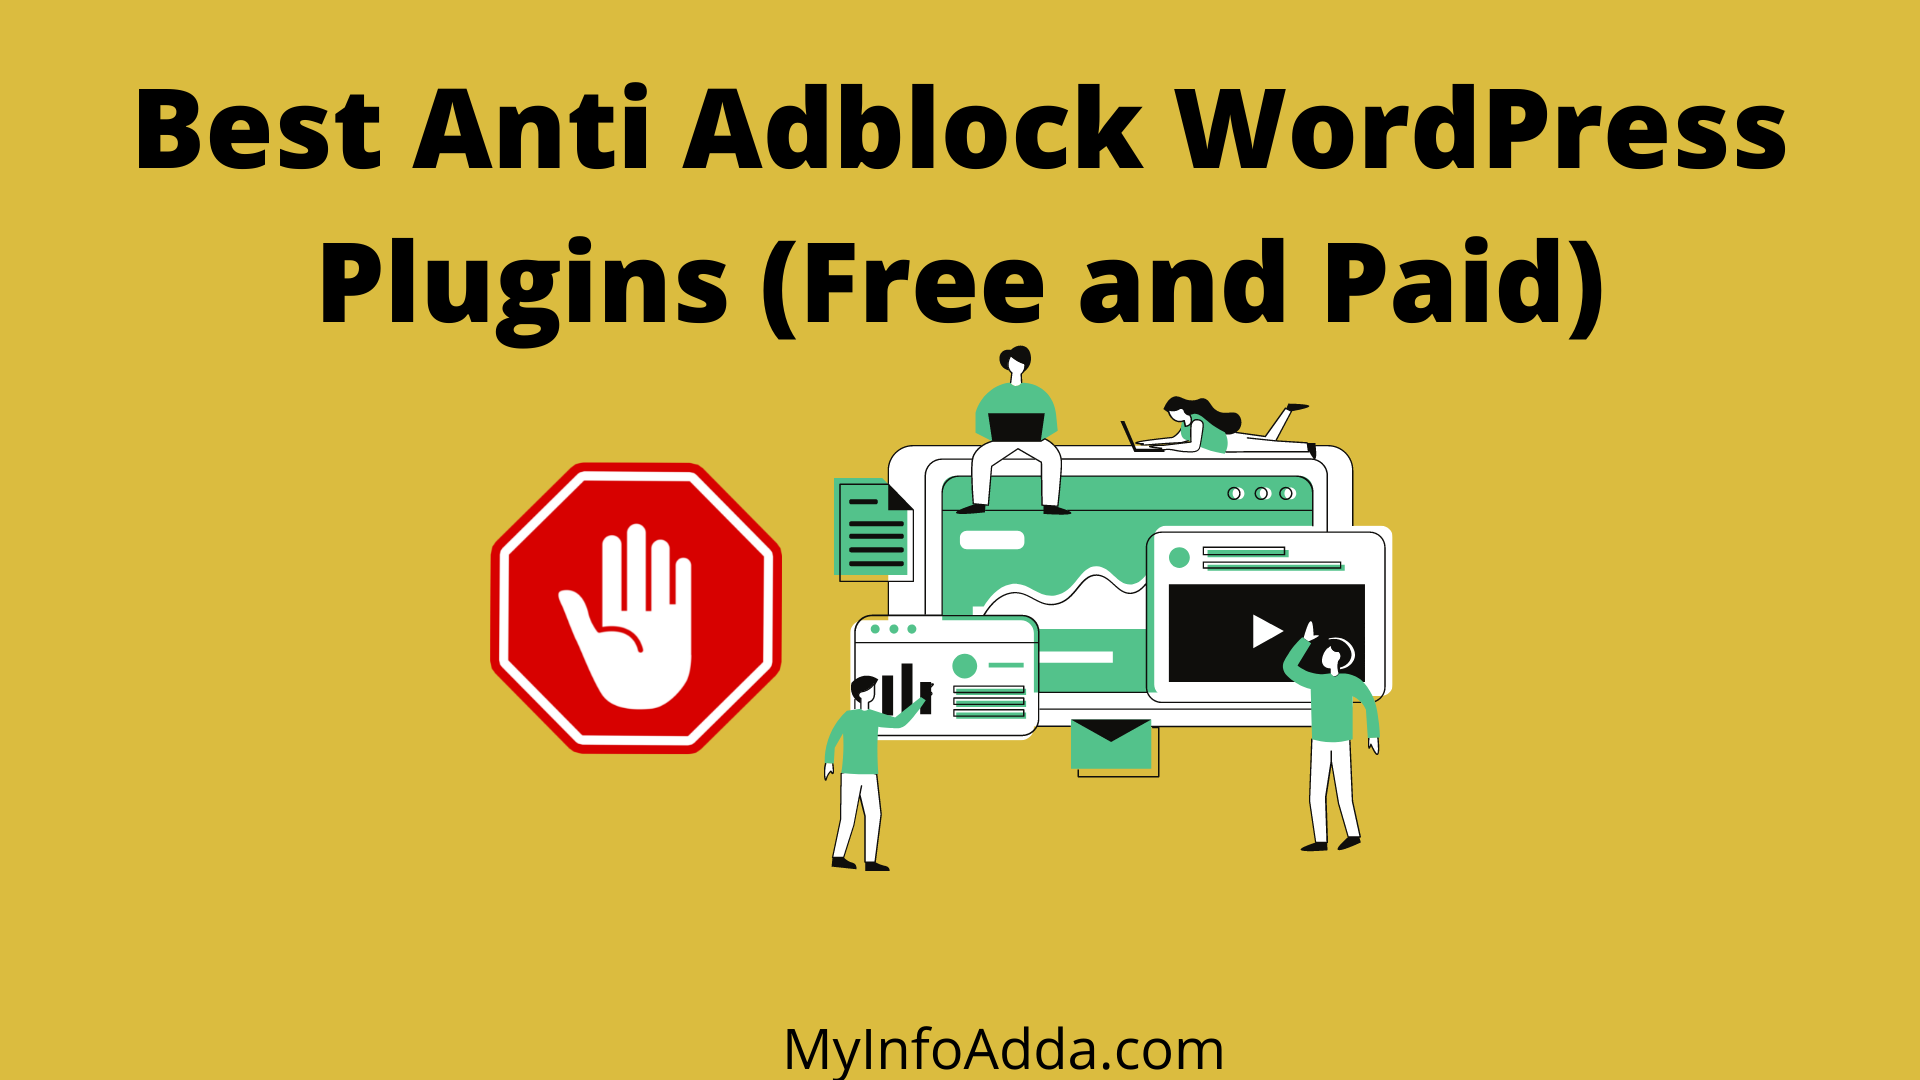 Best Anti Adblock WordPress Plugins (Free and Paid)